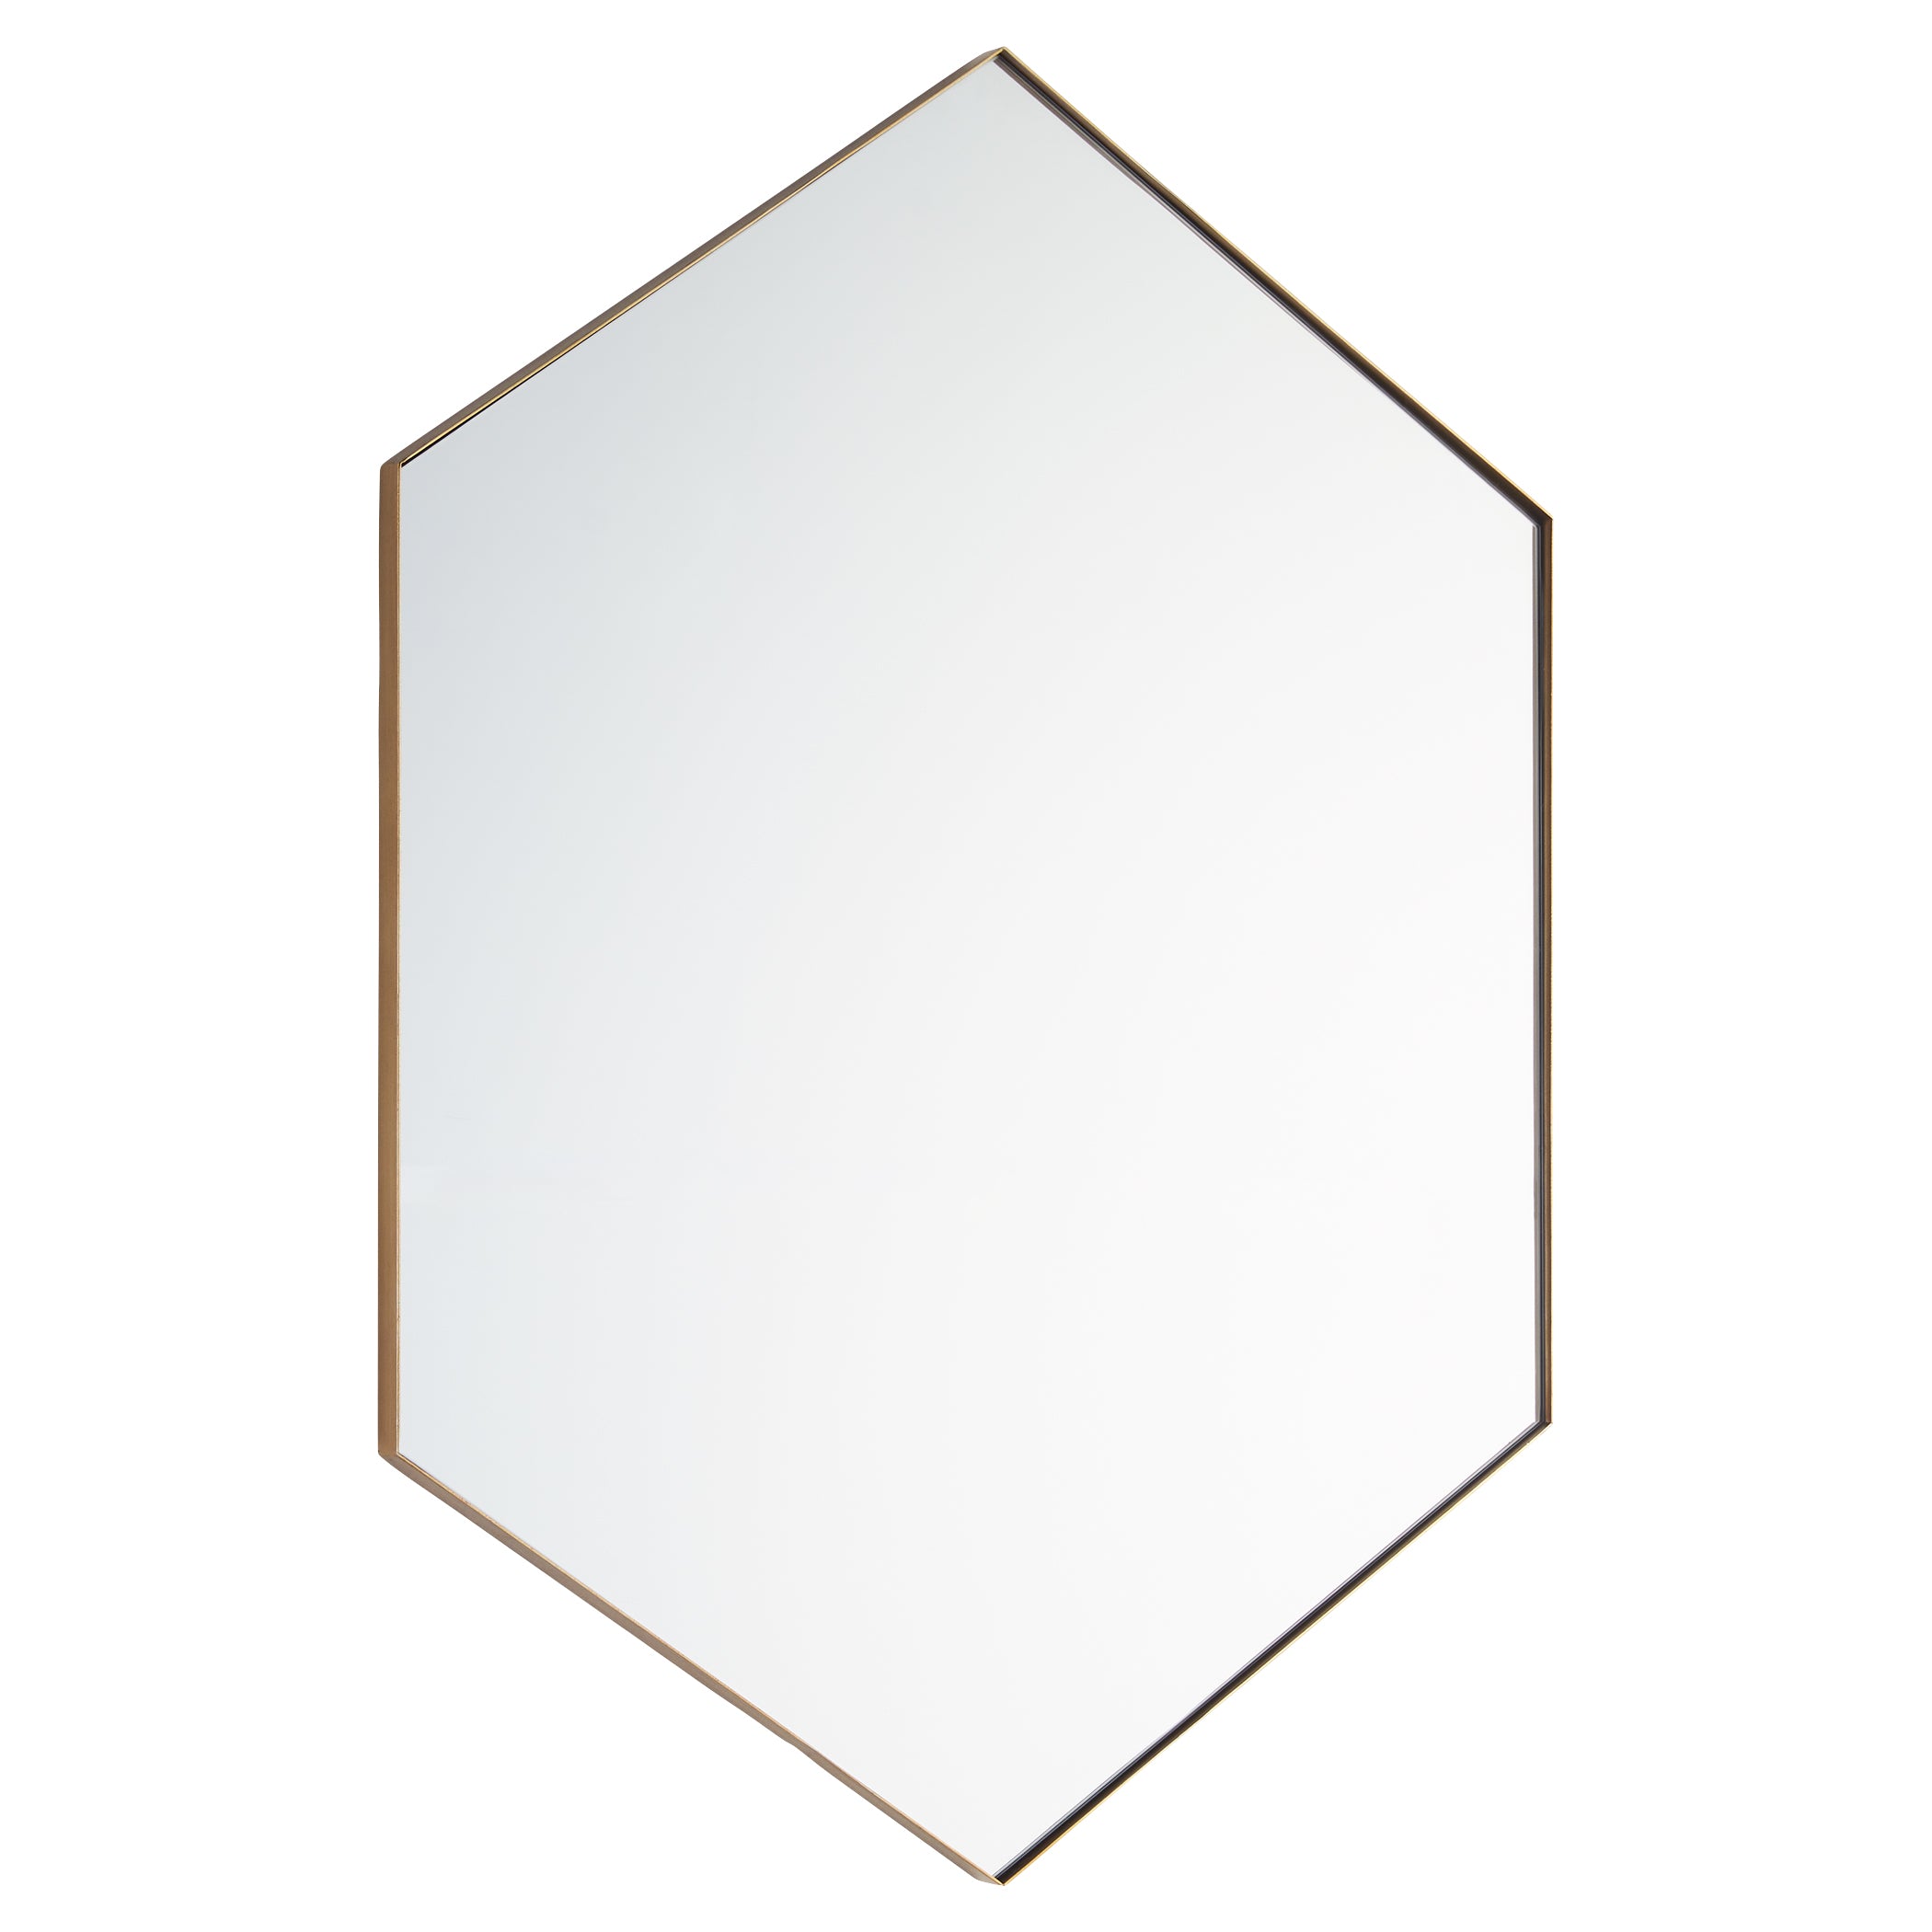 Quorum 13-2434-21 Mirror - Gold Finished